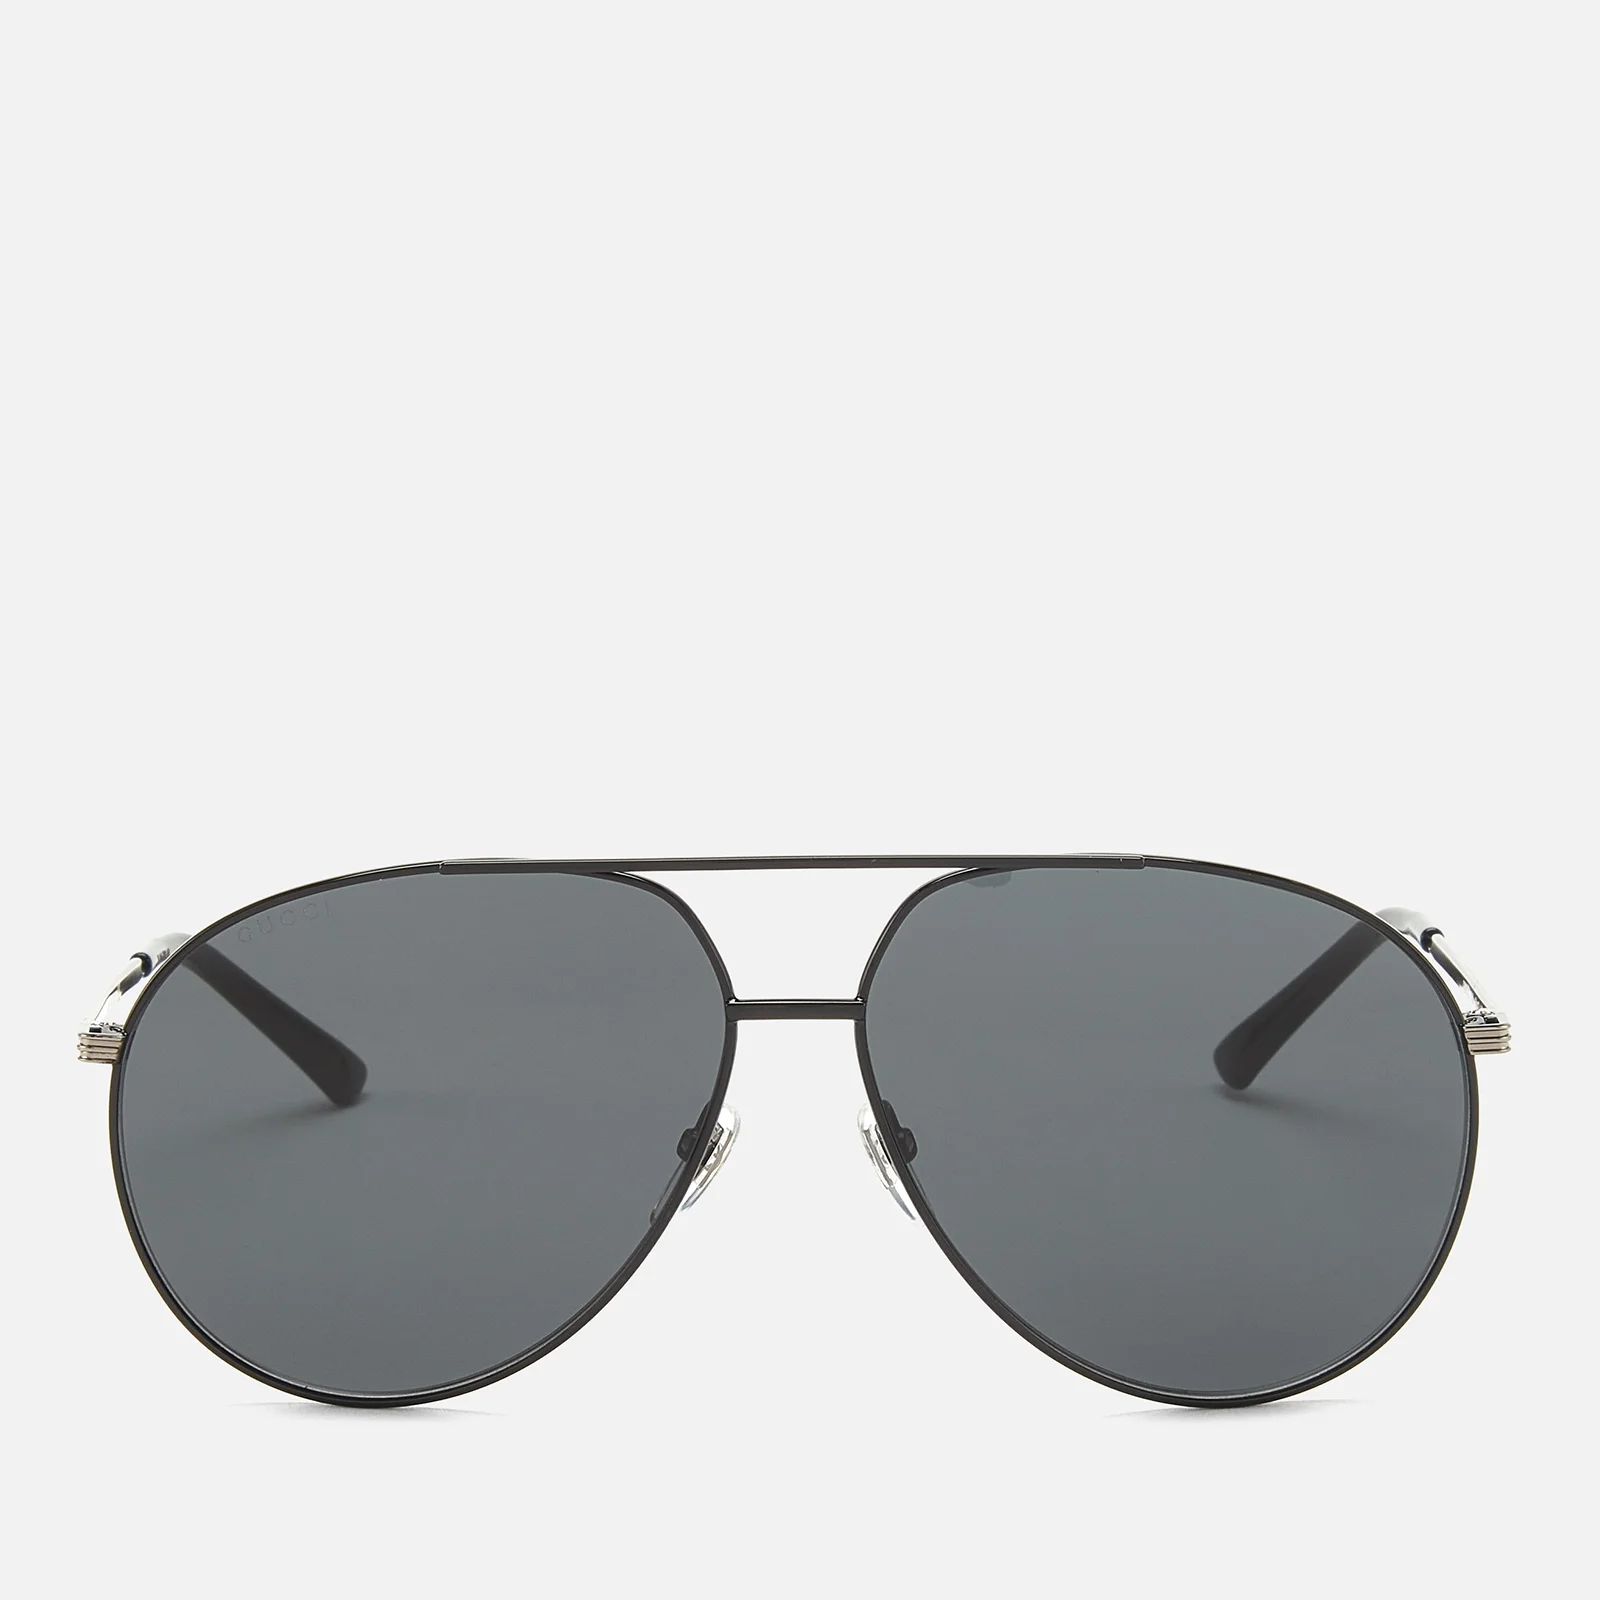 Gucci Men's Metal Frame Sunglasses - Shiny Black Image 1